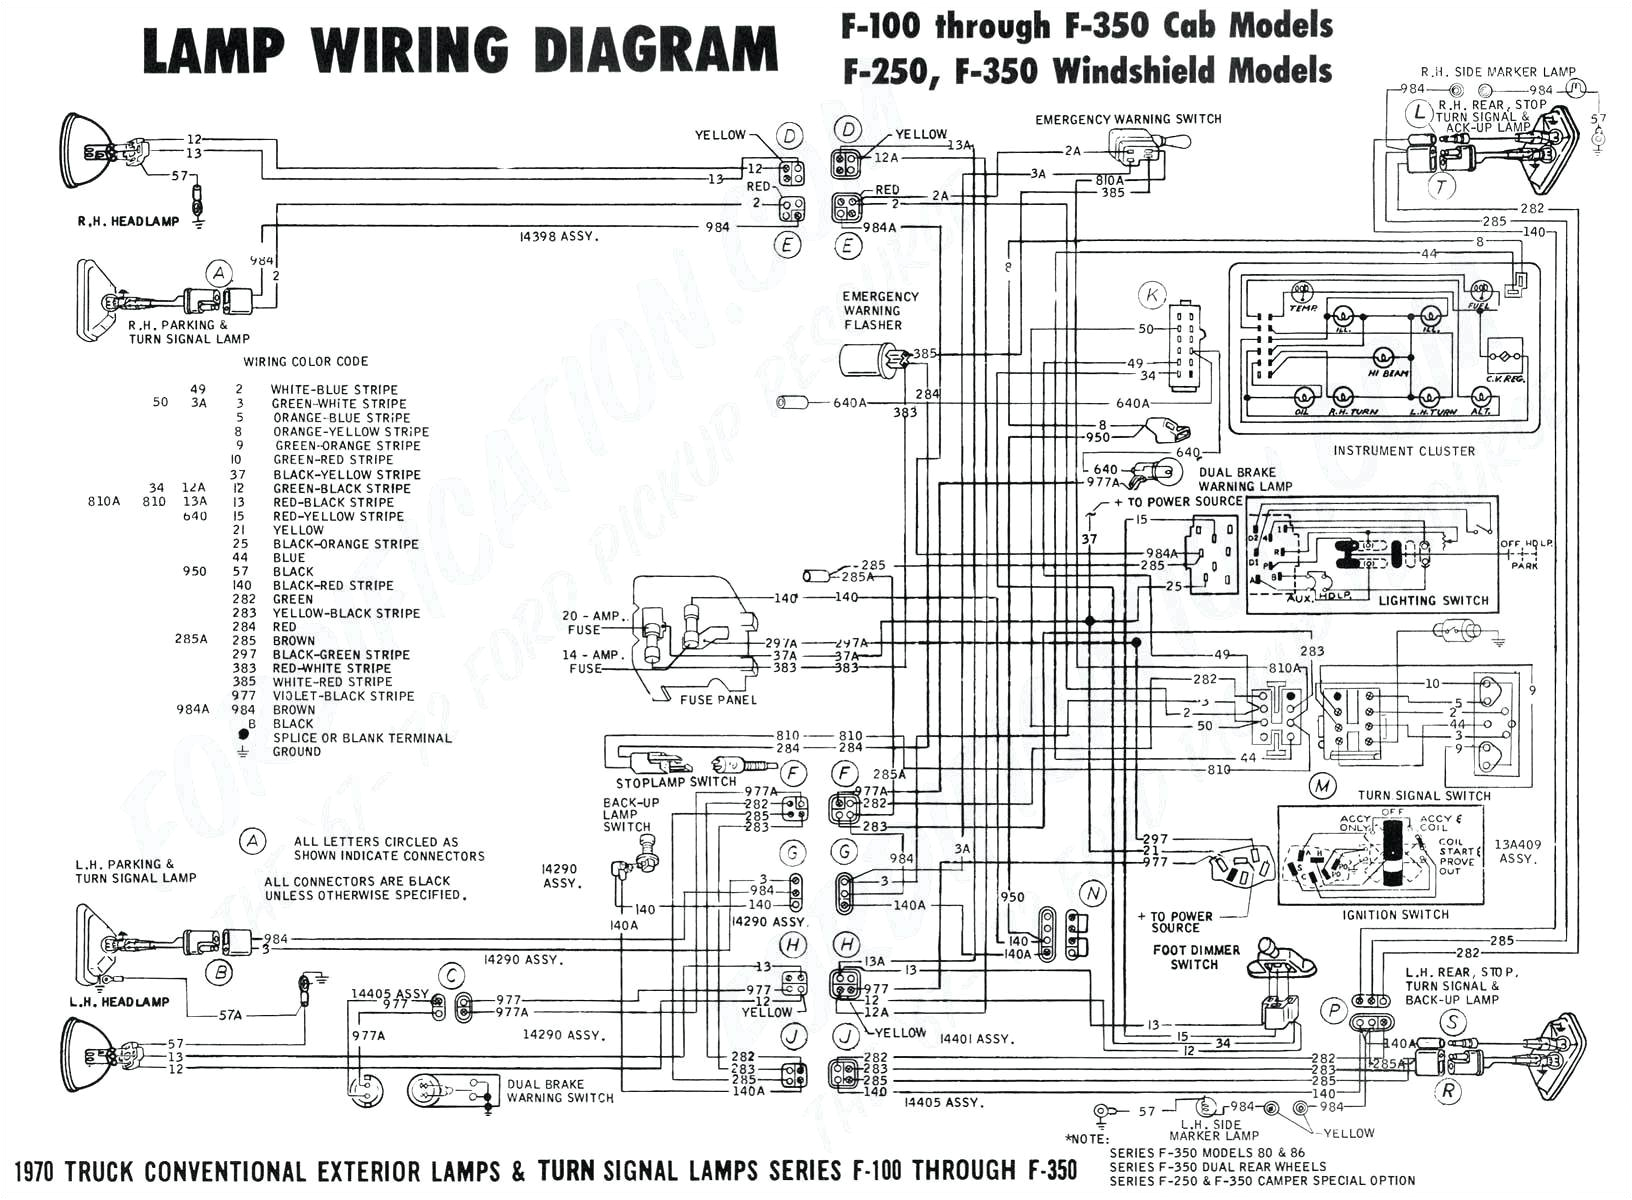 qed wiring diagram wiring diagram article reviewqed wiring diagram wiring diagram fascinatingqed wiring diagram wiring diagram